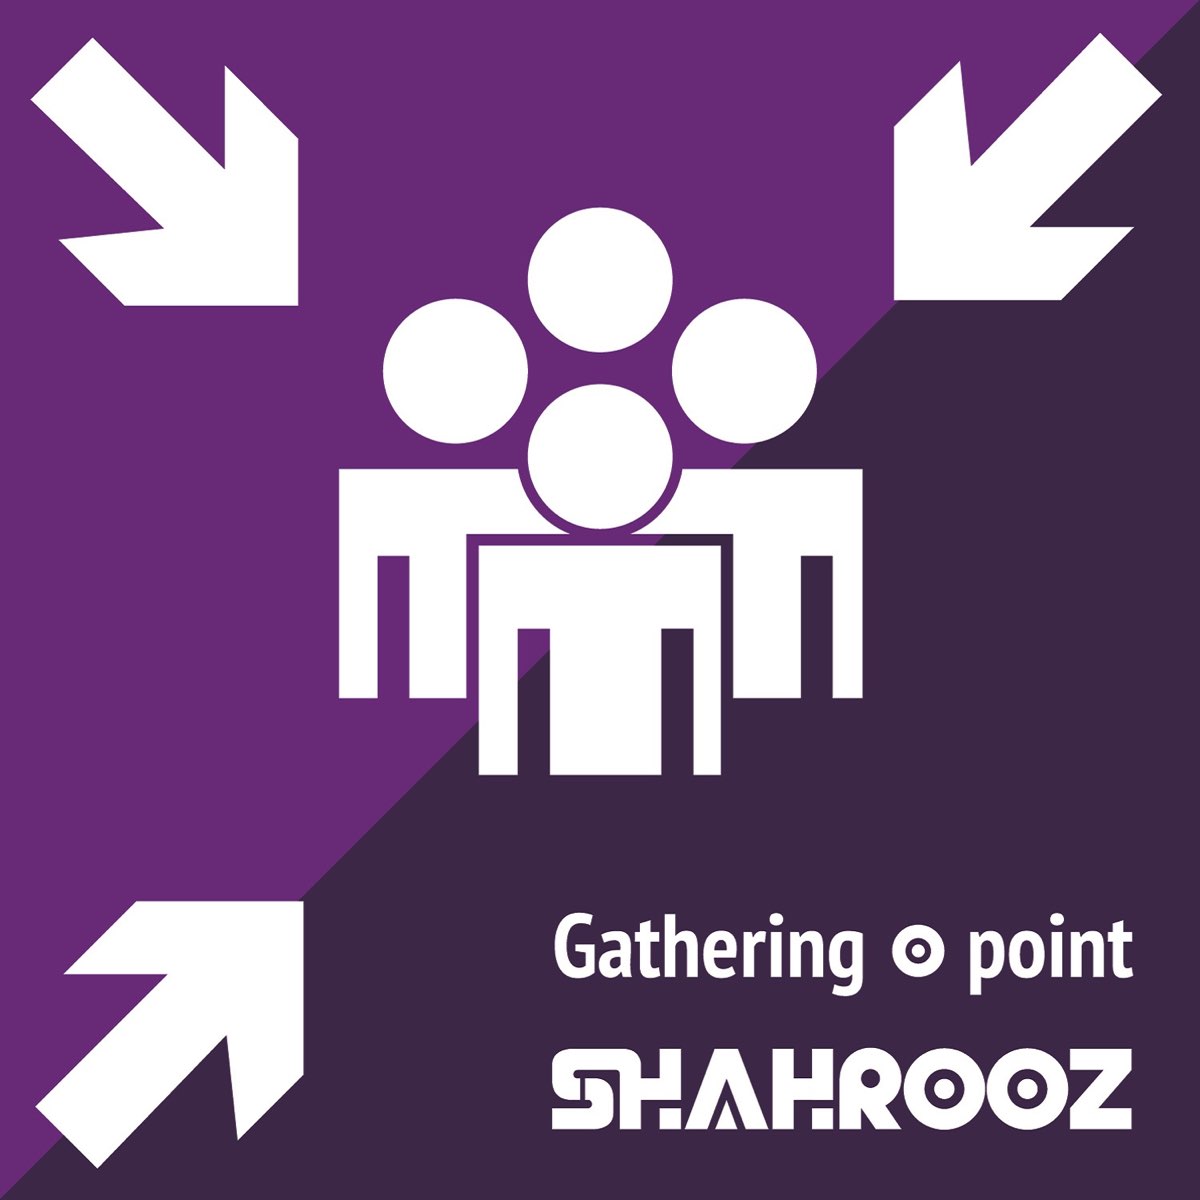 Детской поинты. The Gathering альбомы. Gathering point sign. Arsh Shahrooz Zomorodi Associates.